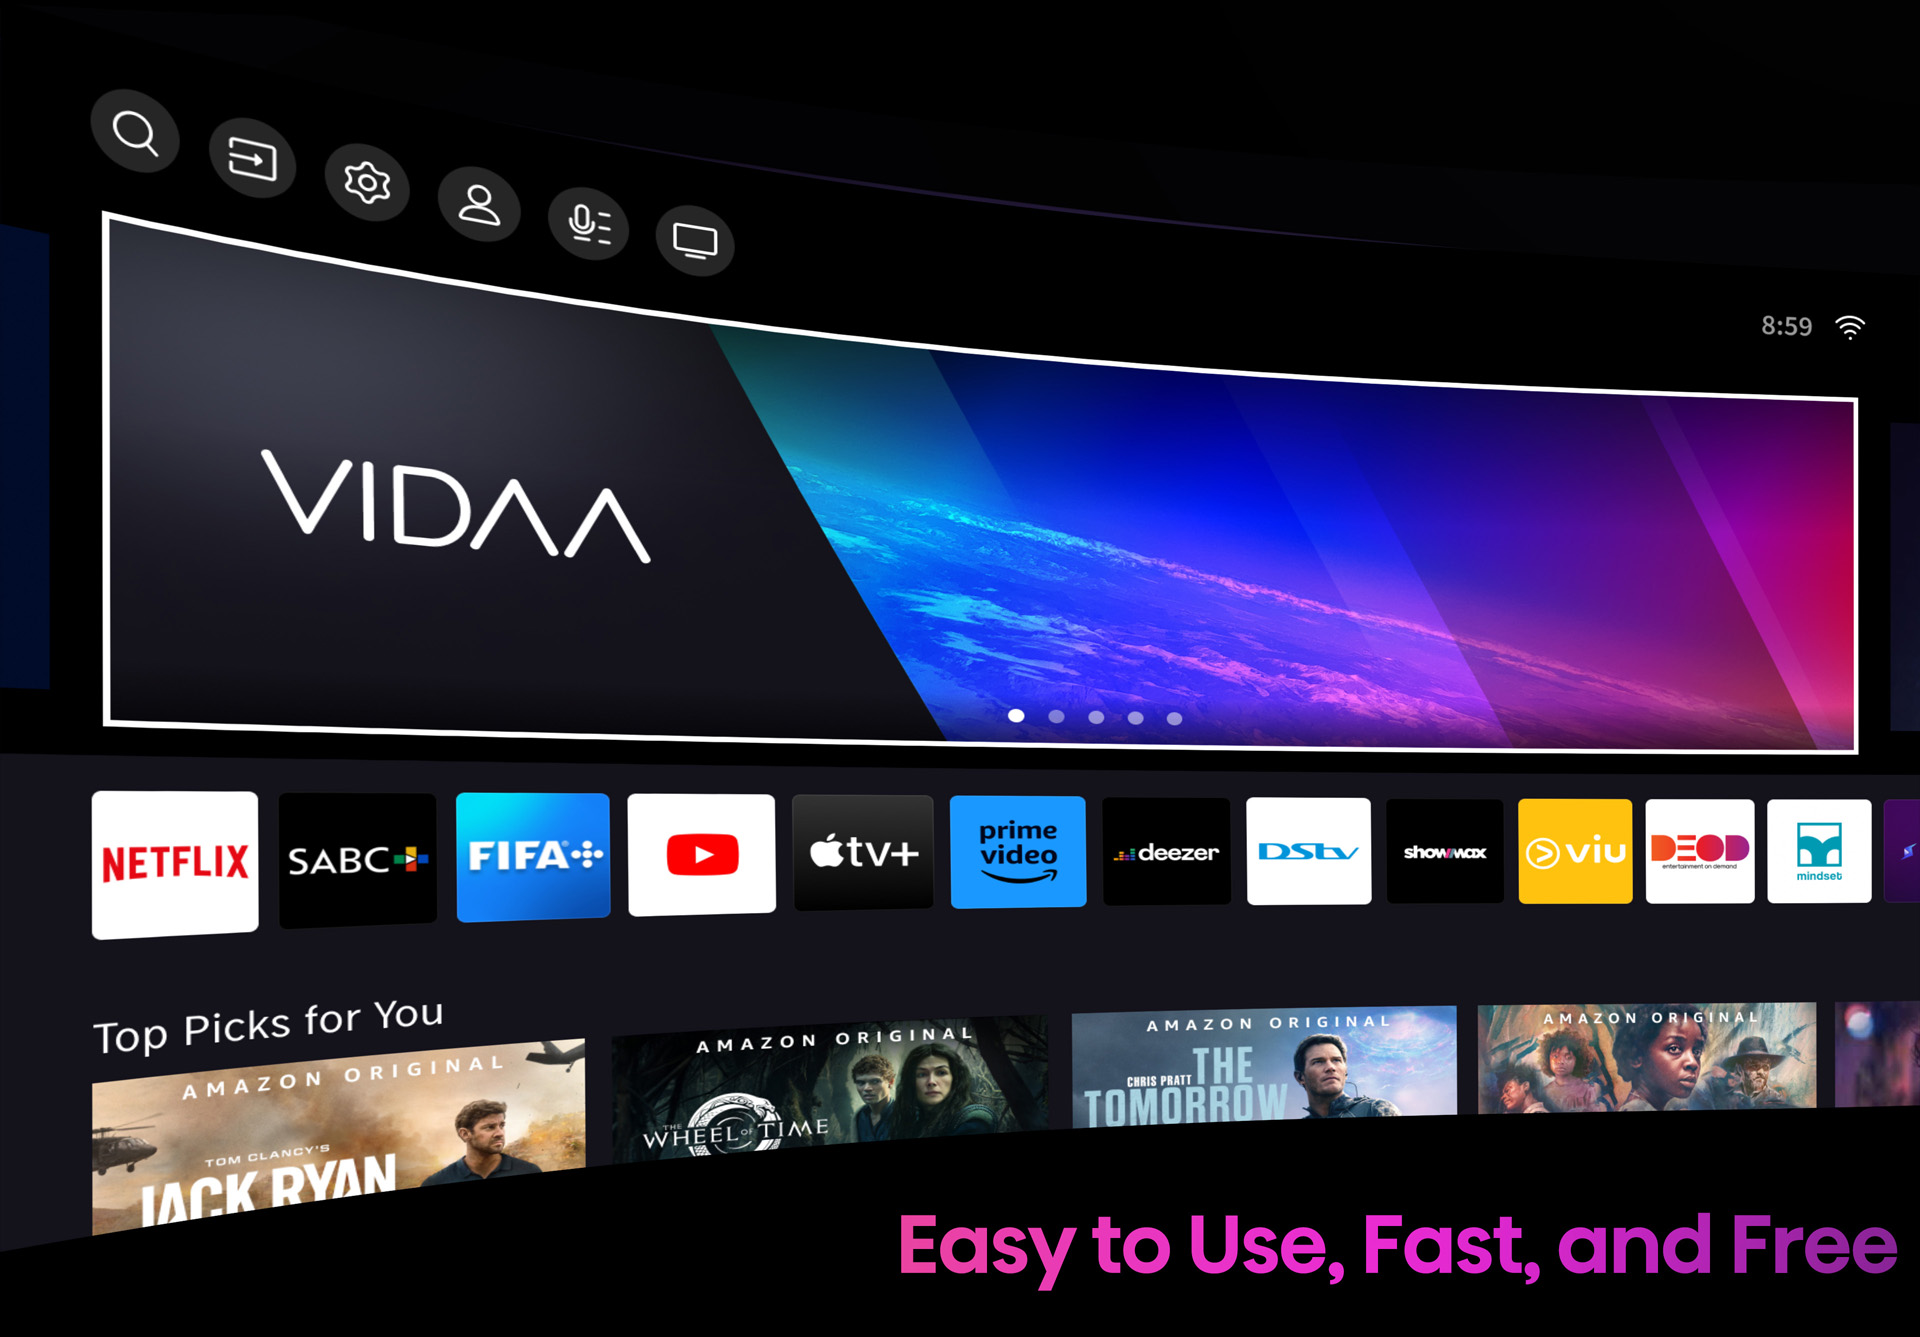 Hisense 43 - Inch 4K UHD VIDAA Smart TV 43A6KS, Airplay 2, AI 4K Upscaler, Dolby Vision, With In-Built Free To Air Decoder, Bluetooth, HDMI, Chromecast, USB, Netflix, Youtube - Black